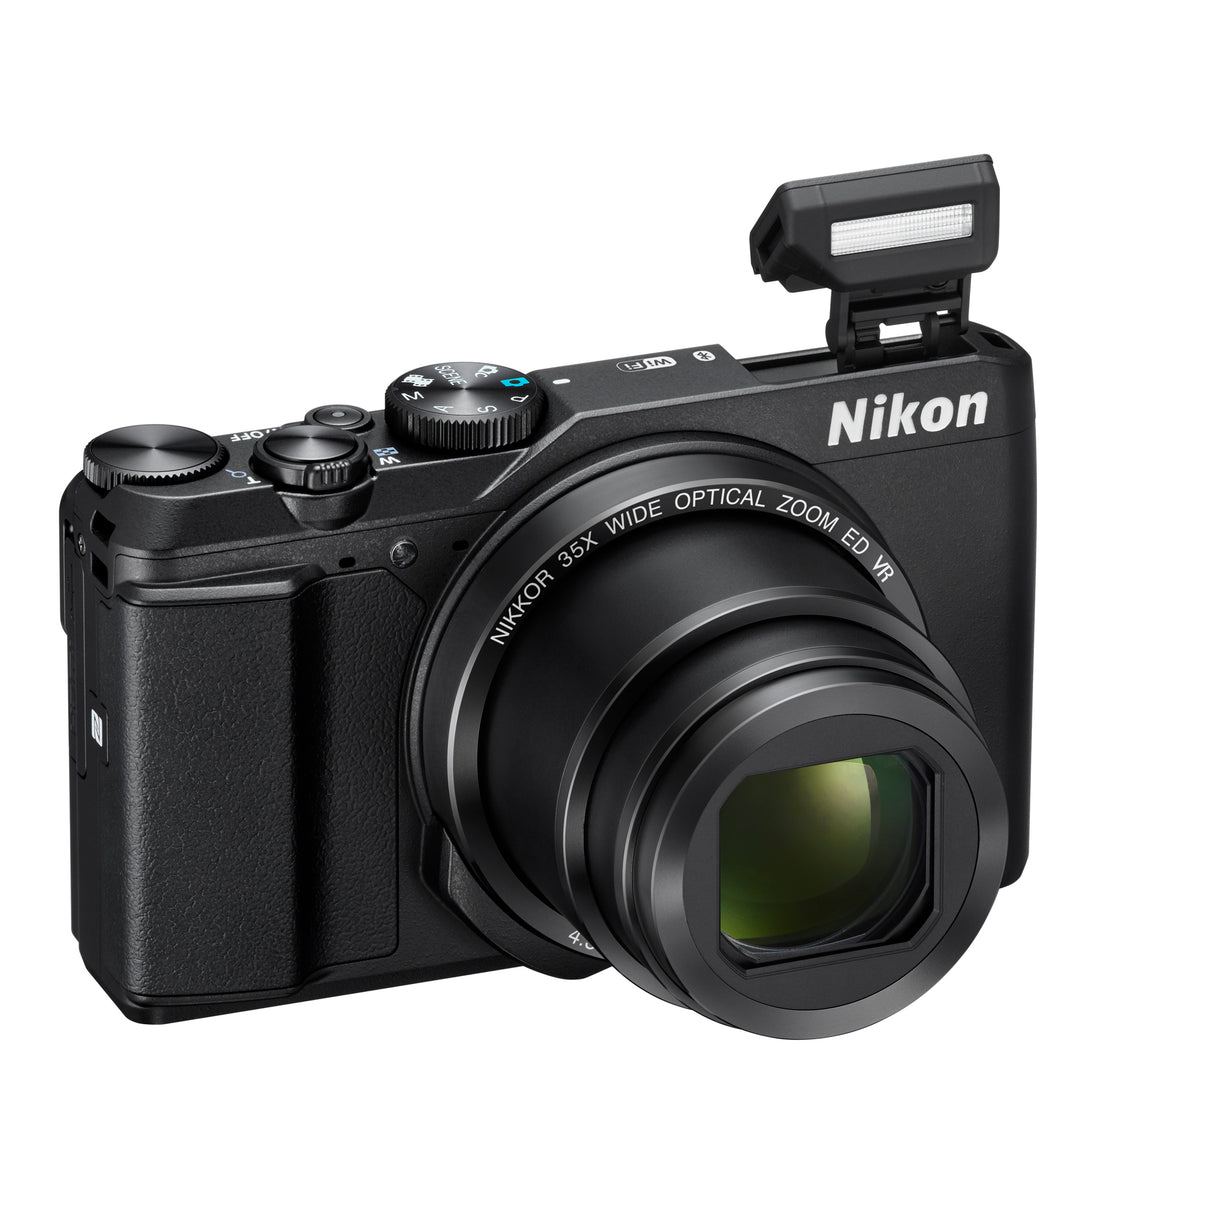 Nikon COOLPIX A900 Point & Shoot Camera